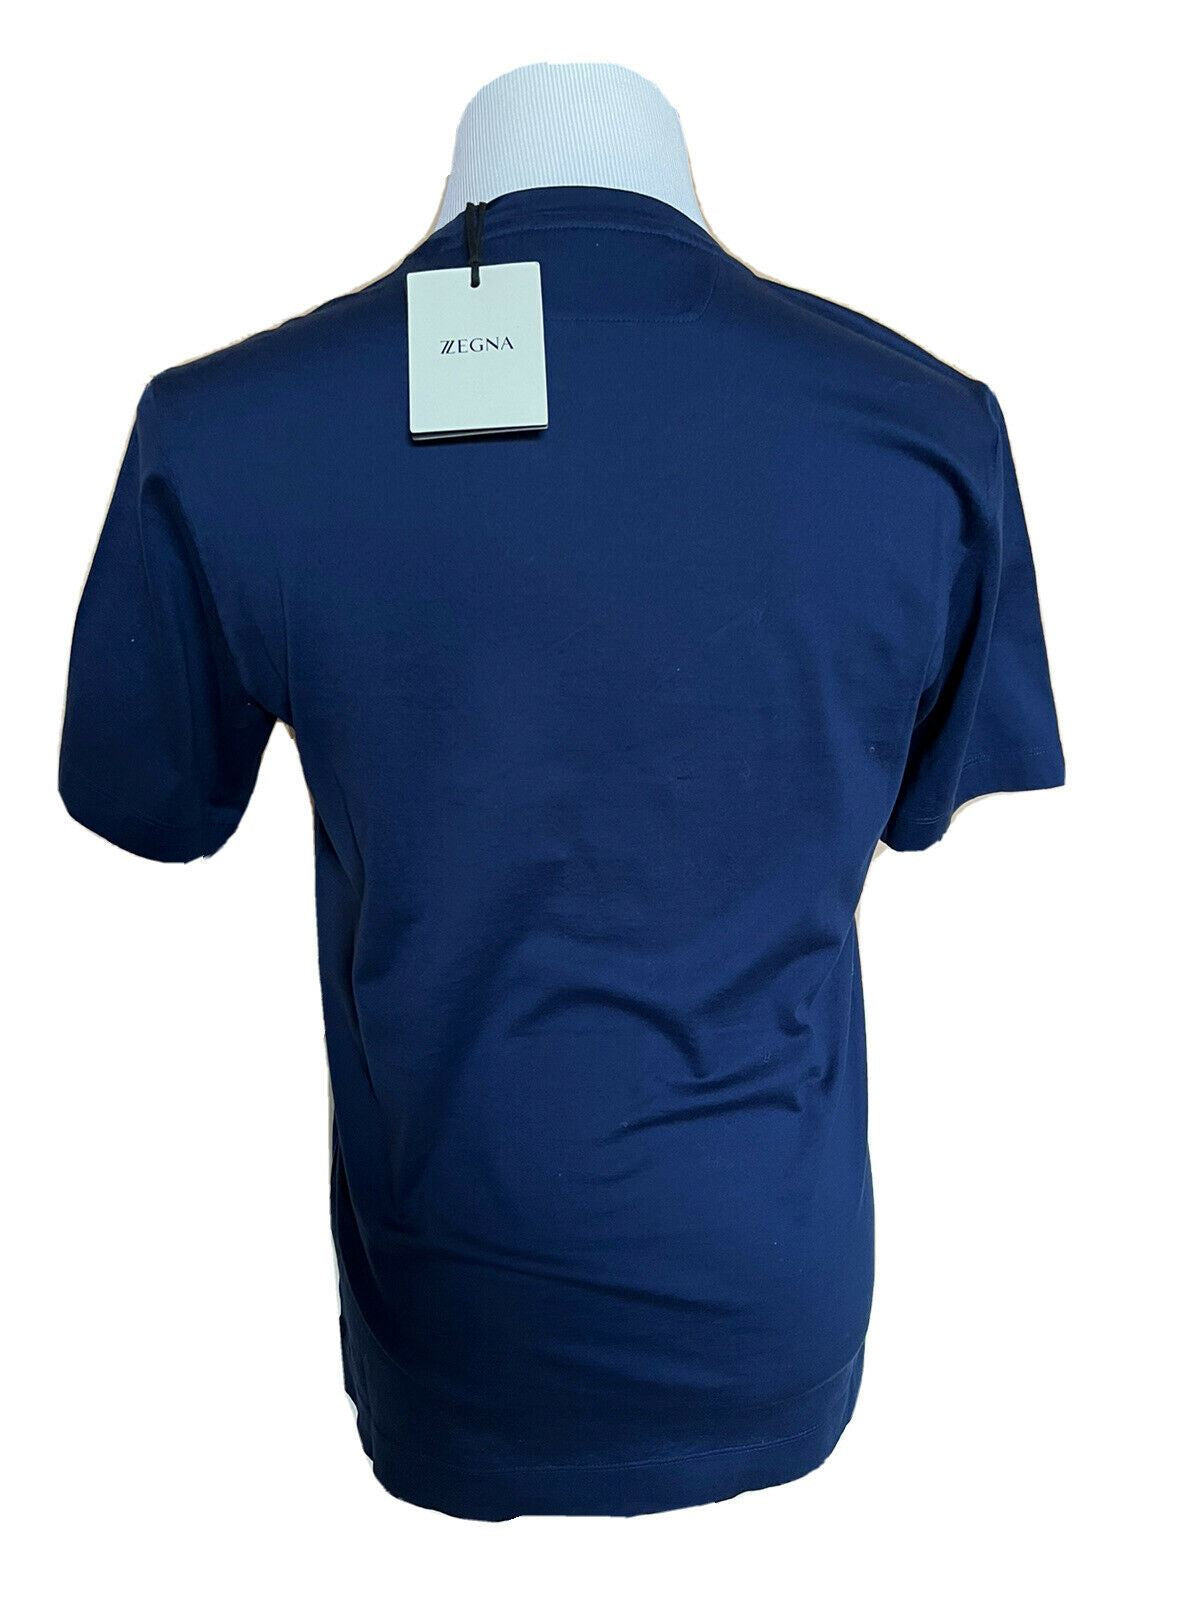 NWT $325 ZZEGNA Crewneck Blue T-Shirt XL ZZF630